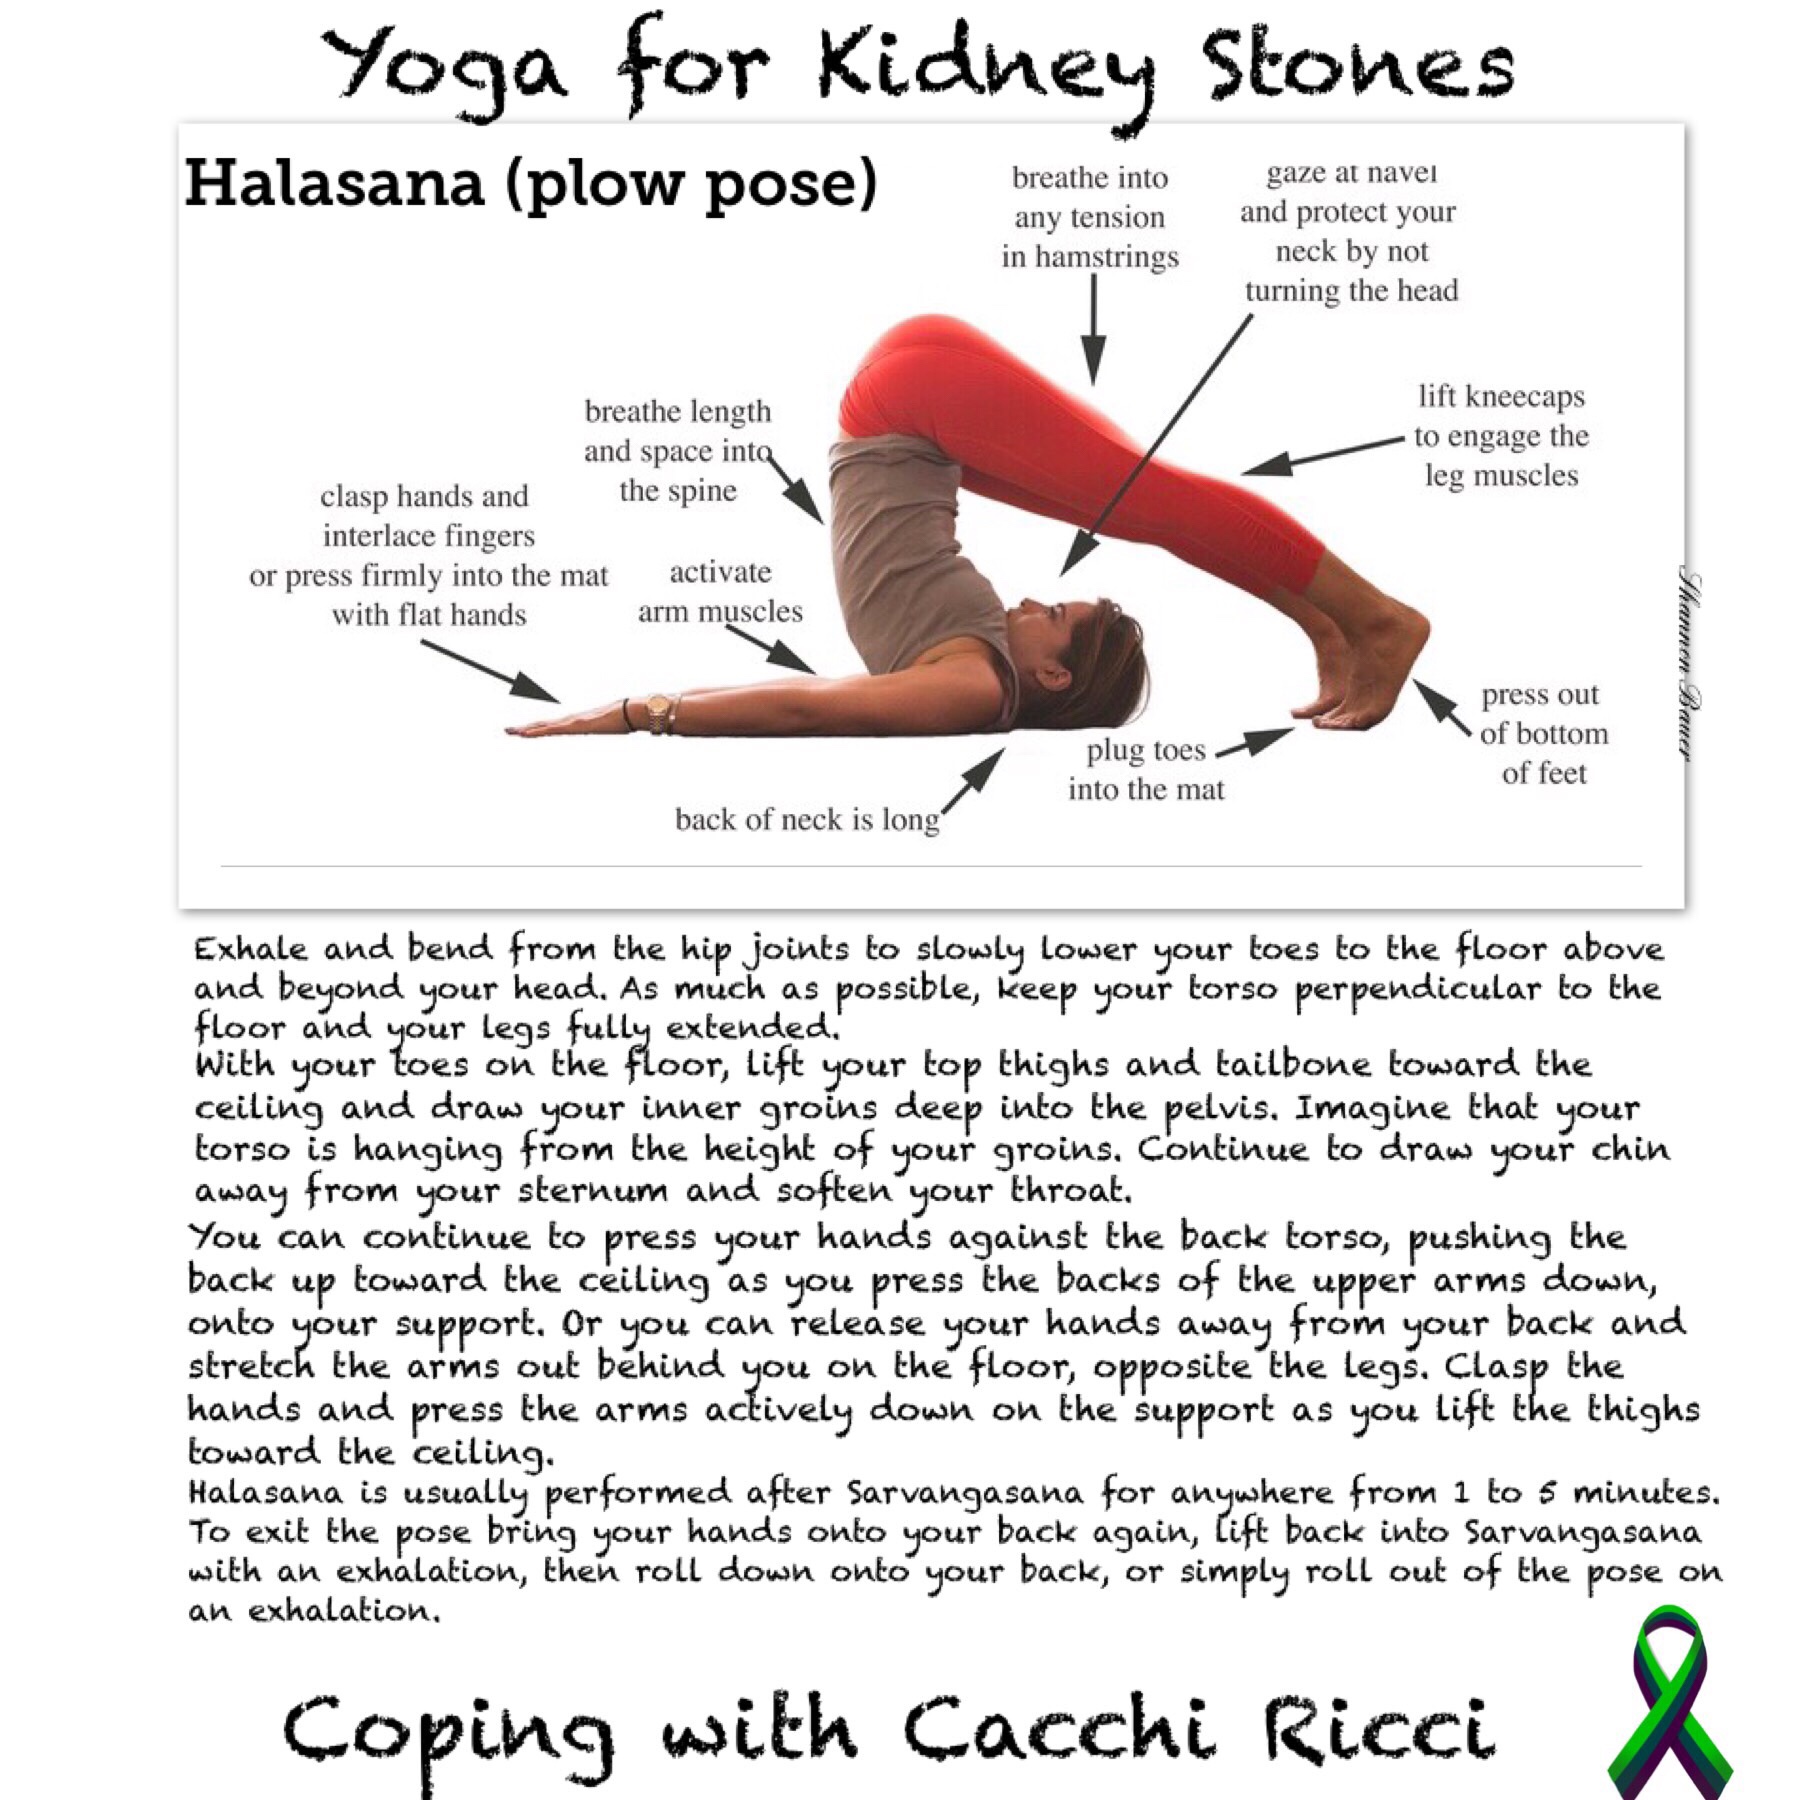 8 signs of kidney stones | HealthShots